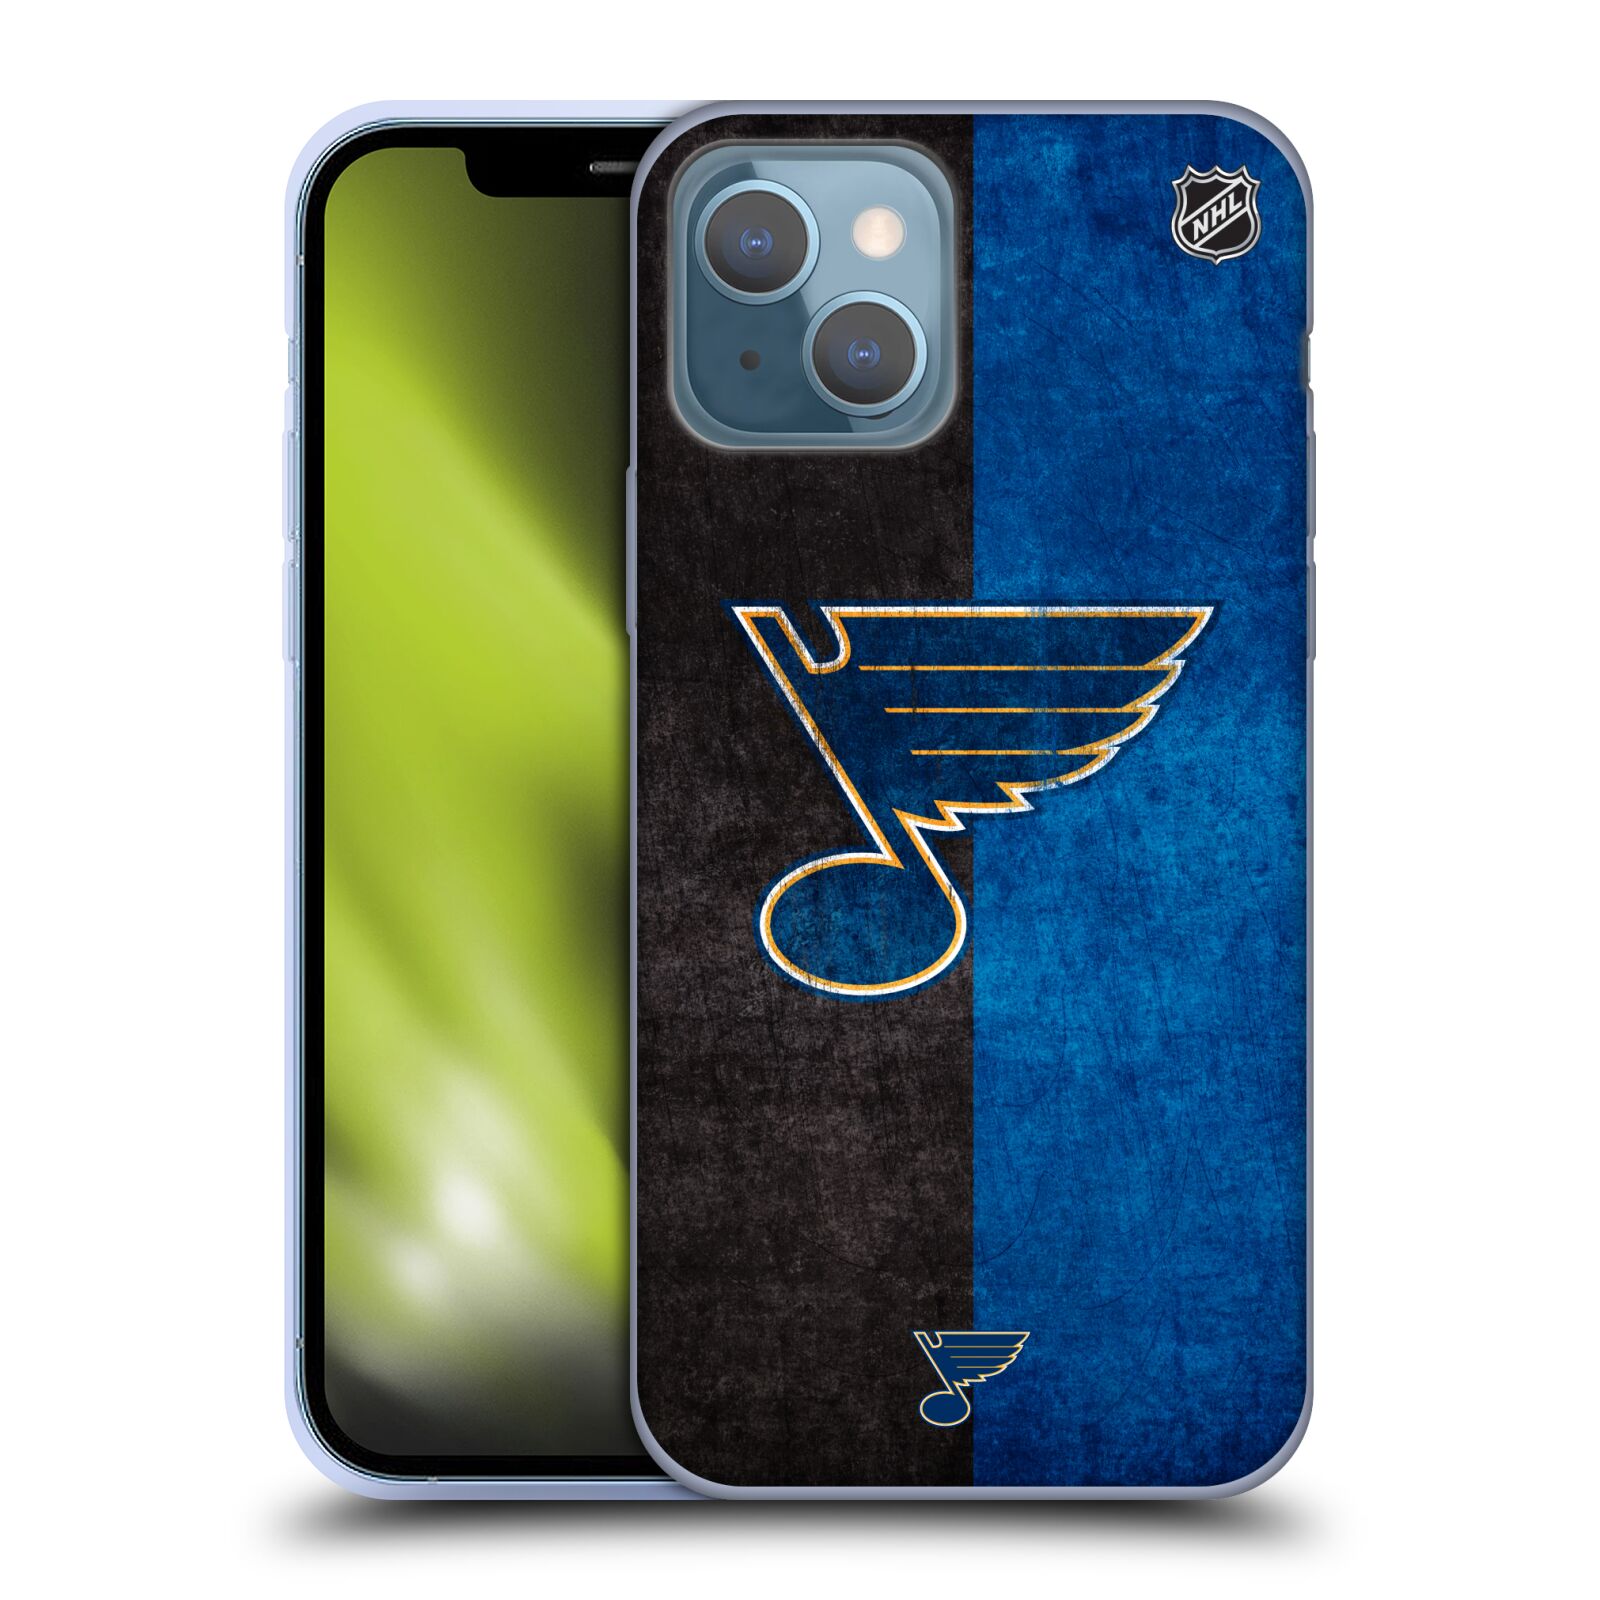 Silikonové pouzdro na mobil Apple iPhone 13 - NHL - Půlené logo St Louis Blues (Silikonový kryt, obal, pouzdro na mobilní telefon Apple iPhone 13 s licencovaným motivem NHL - Půlené logo St Louis Blues)